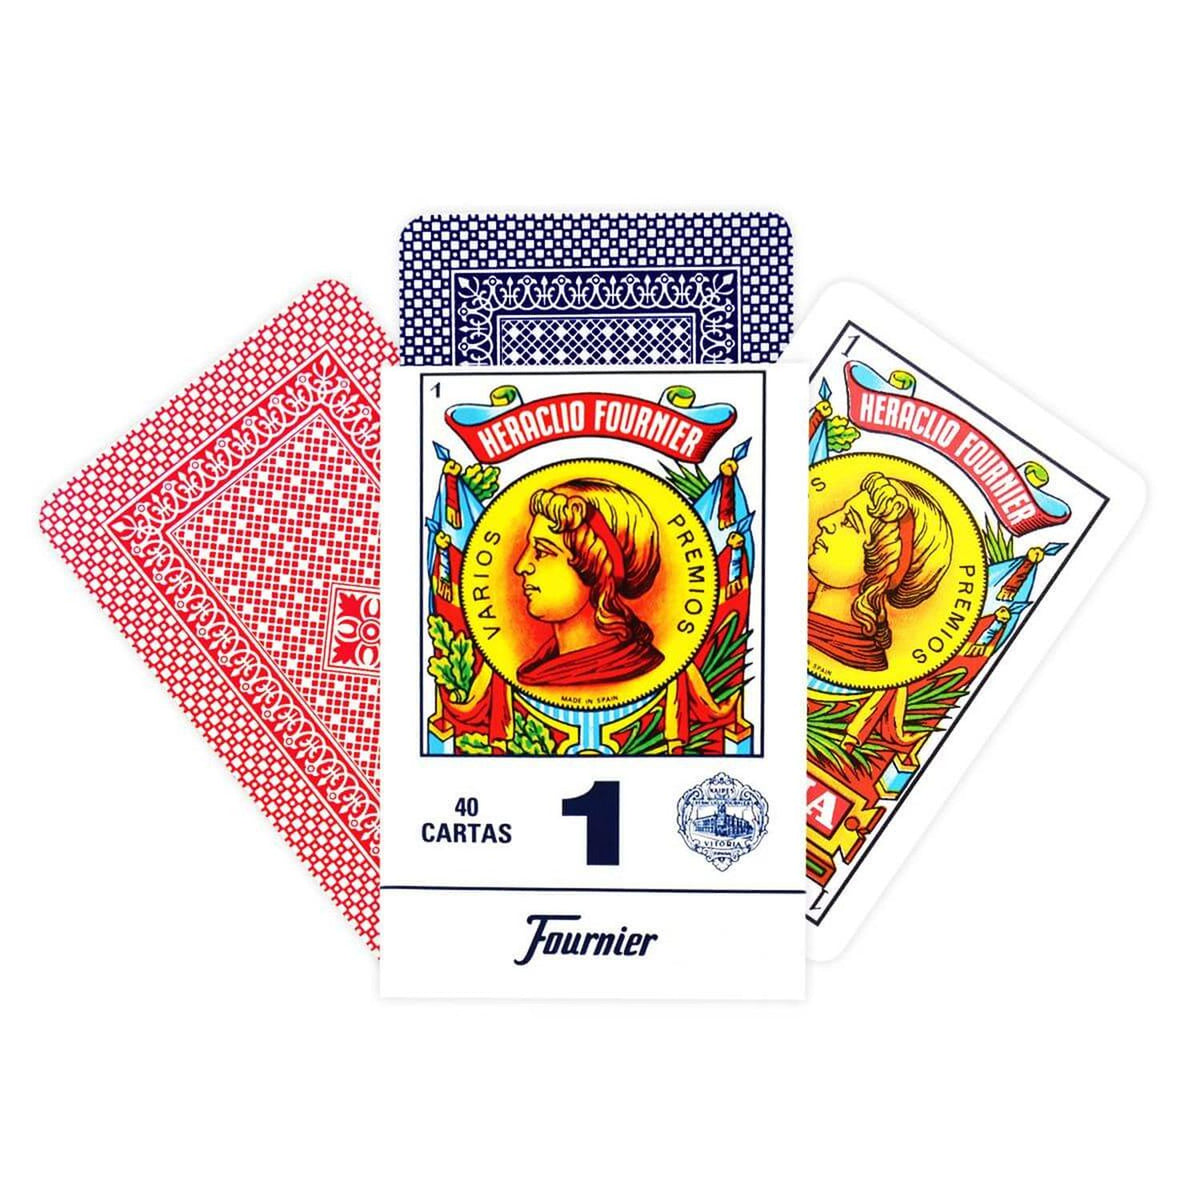 Playing Cards (classic) - BARAJA ESPAÑOLA, PLAYING CARDS DECK, DE WENCESLAO  GUARRO DEL AÑO 1895